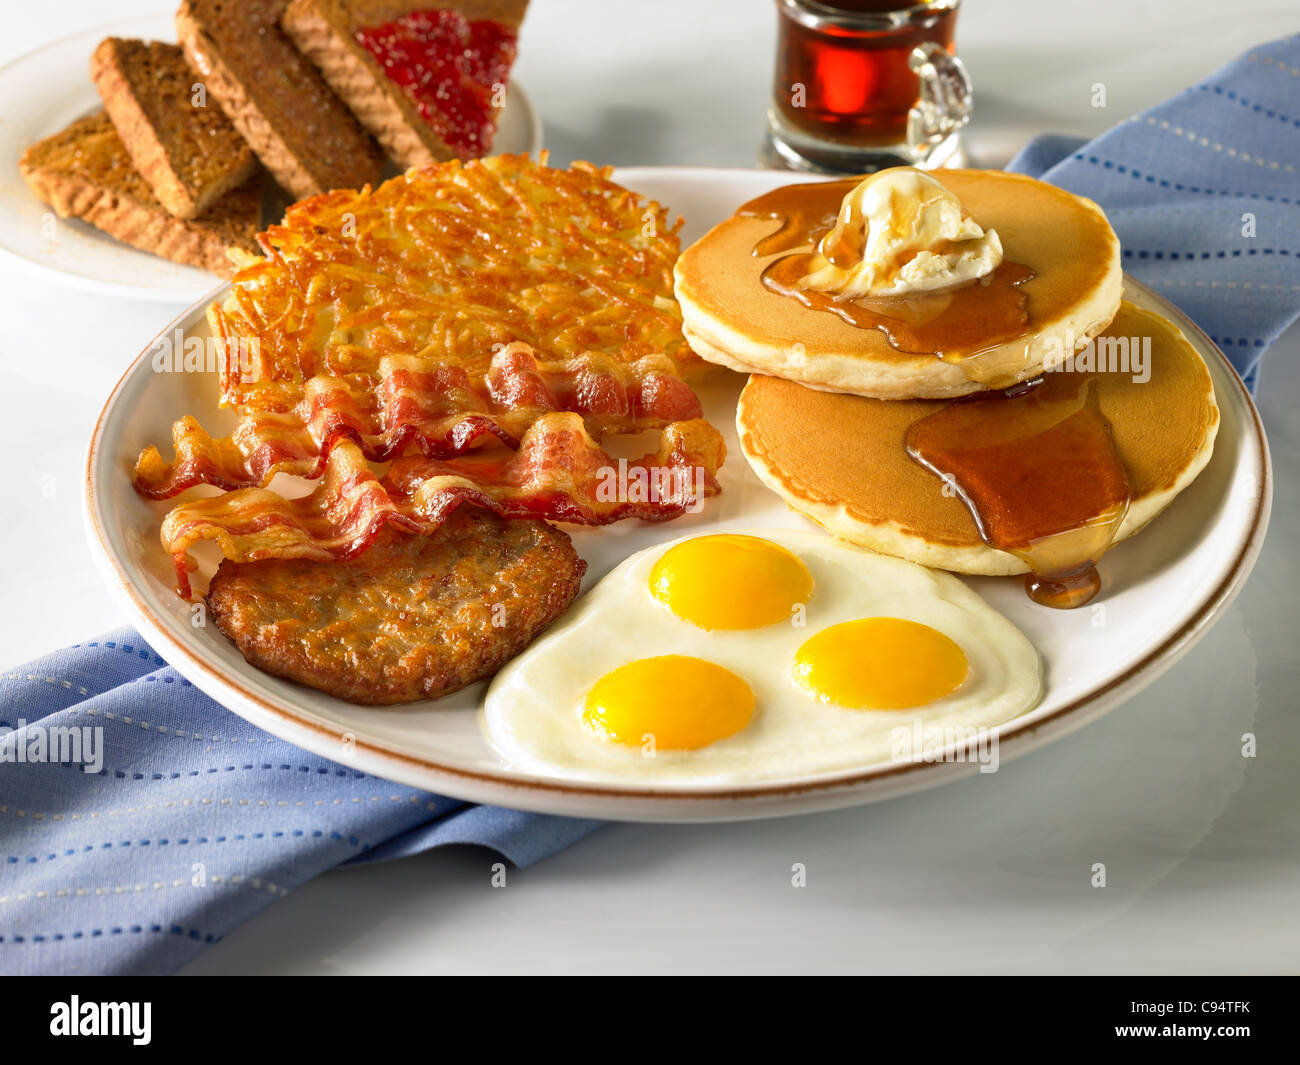 [Image: a-power-breakfast-with-three-eggs-sausag...C94TFK.jpg]